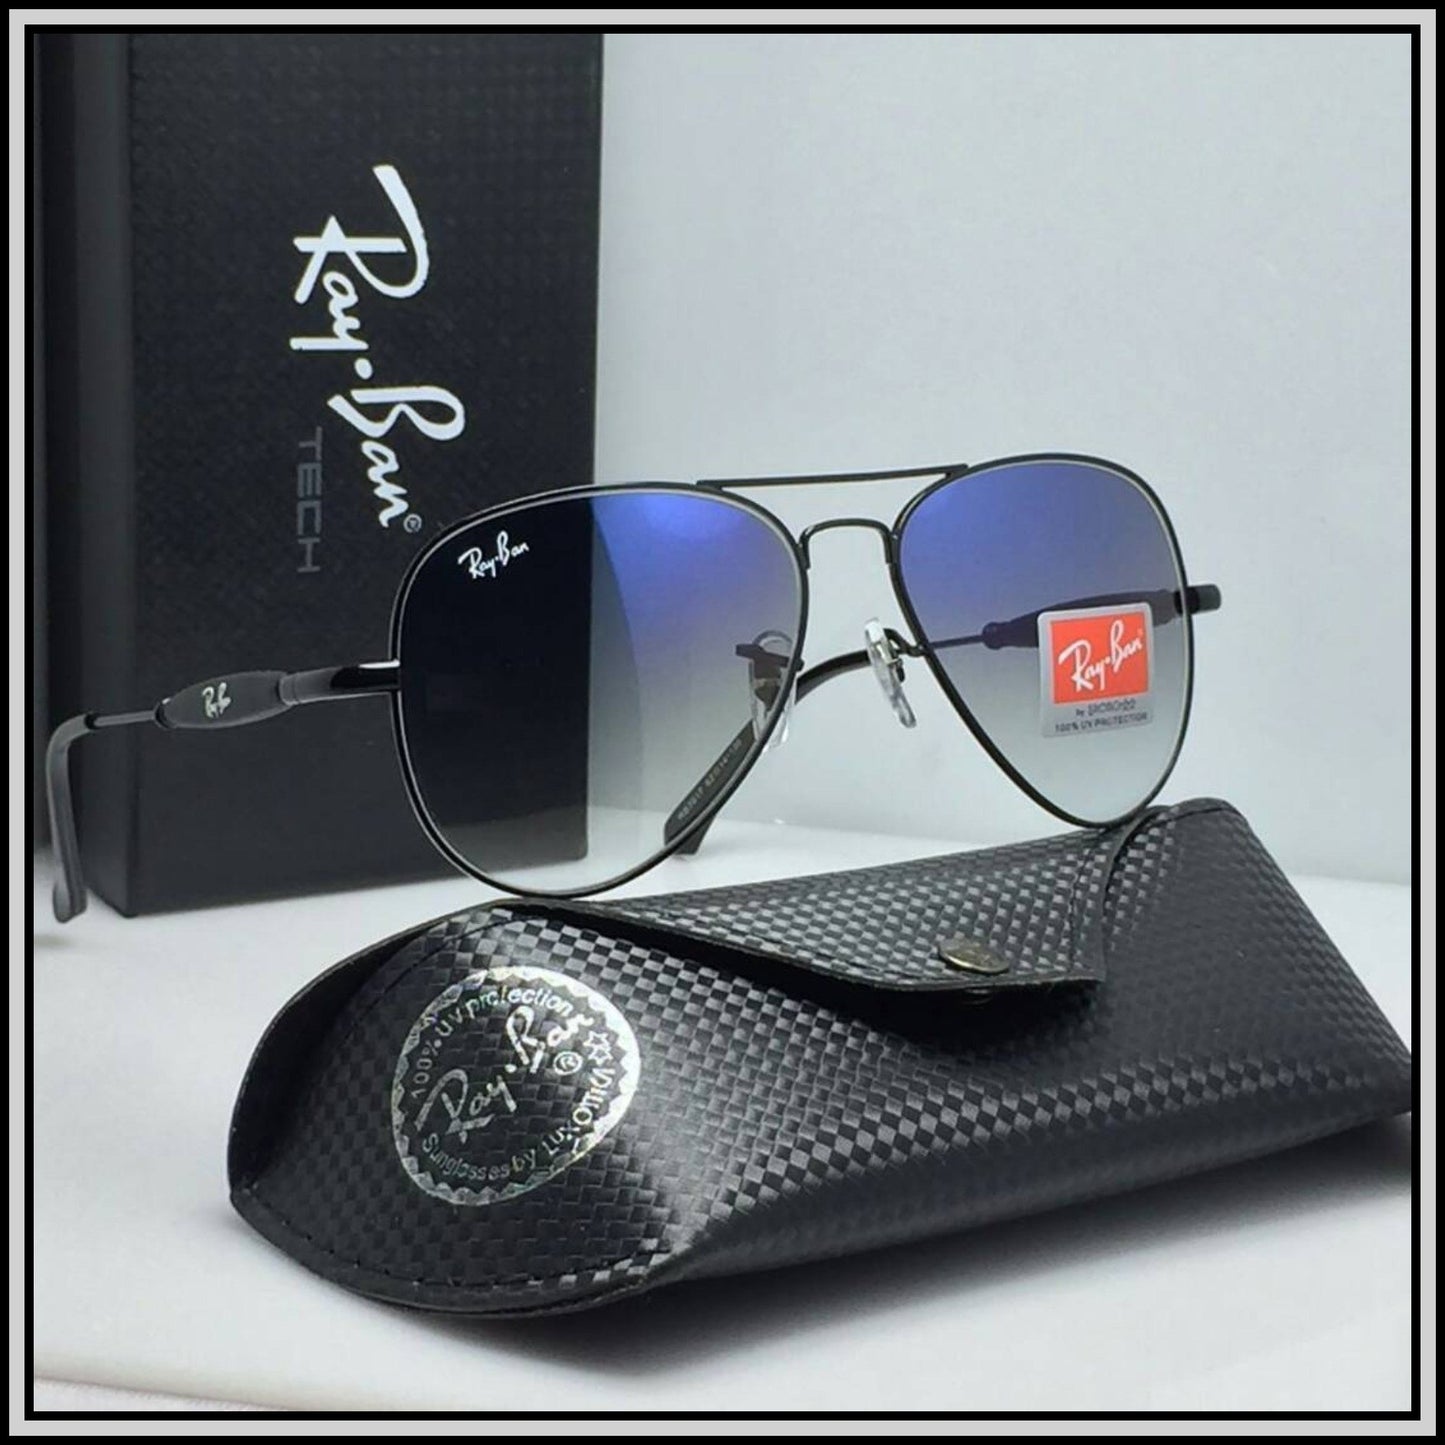 Blue Dc & Black ( 3517 ) New 26-mm Men's Sunglasses.